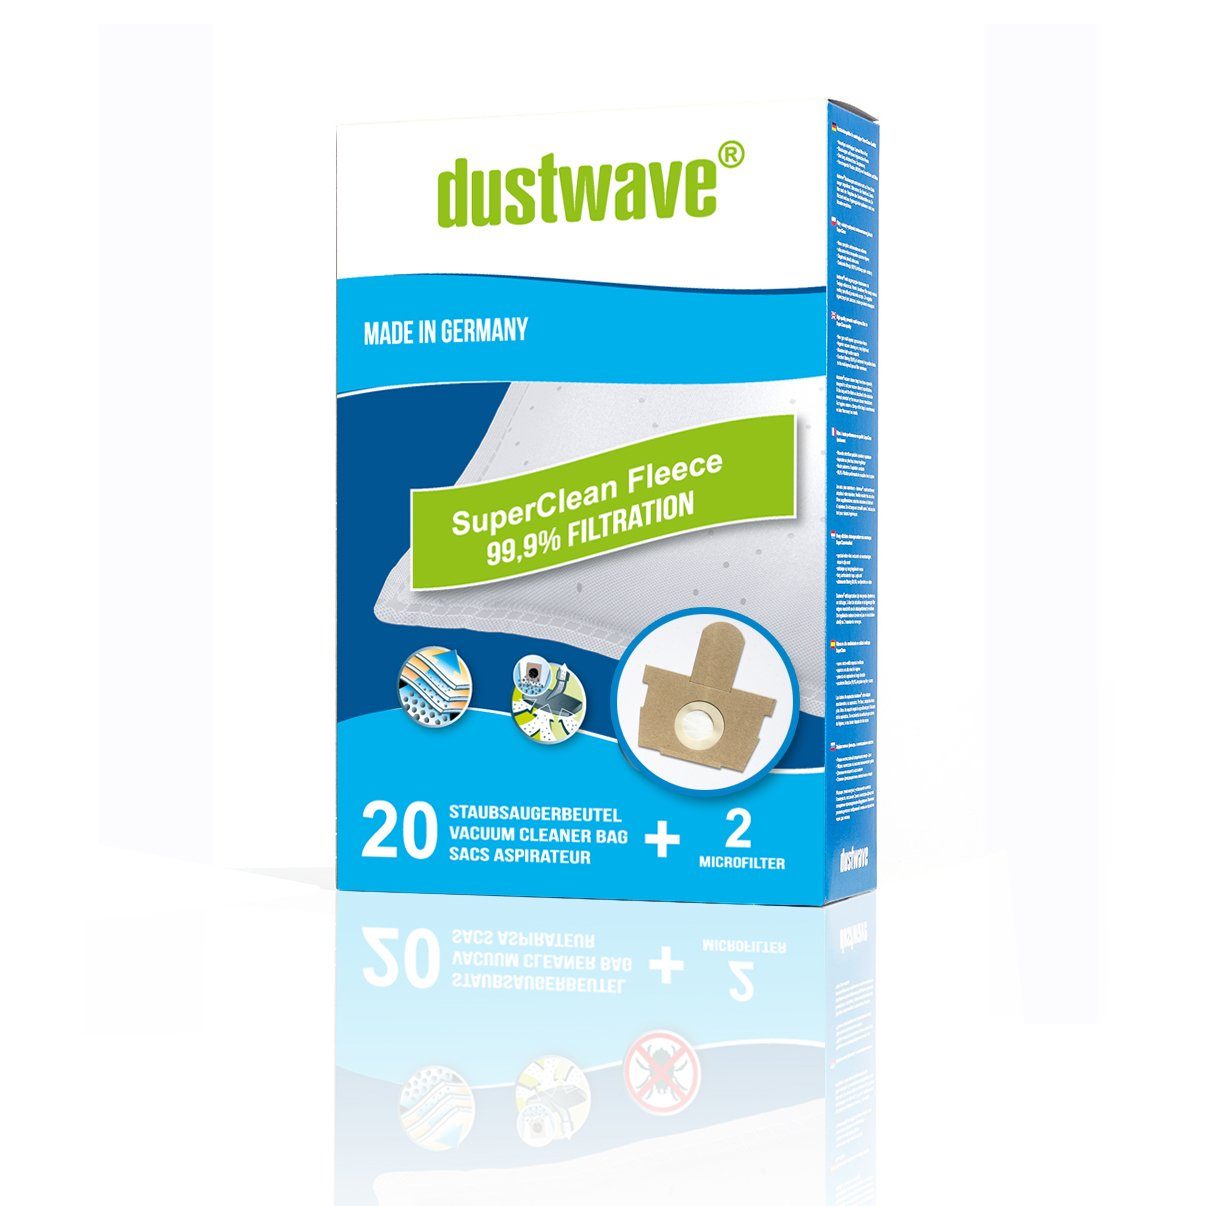 Dustwave Staubsaugerbeutel Megapack, passend für AmazonBasics R21, 20 St., Megapack, 20 Staubsaugerbeutel + 2 Hepa-Filter (ca. 15x15cm - zuschneidbar)